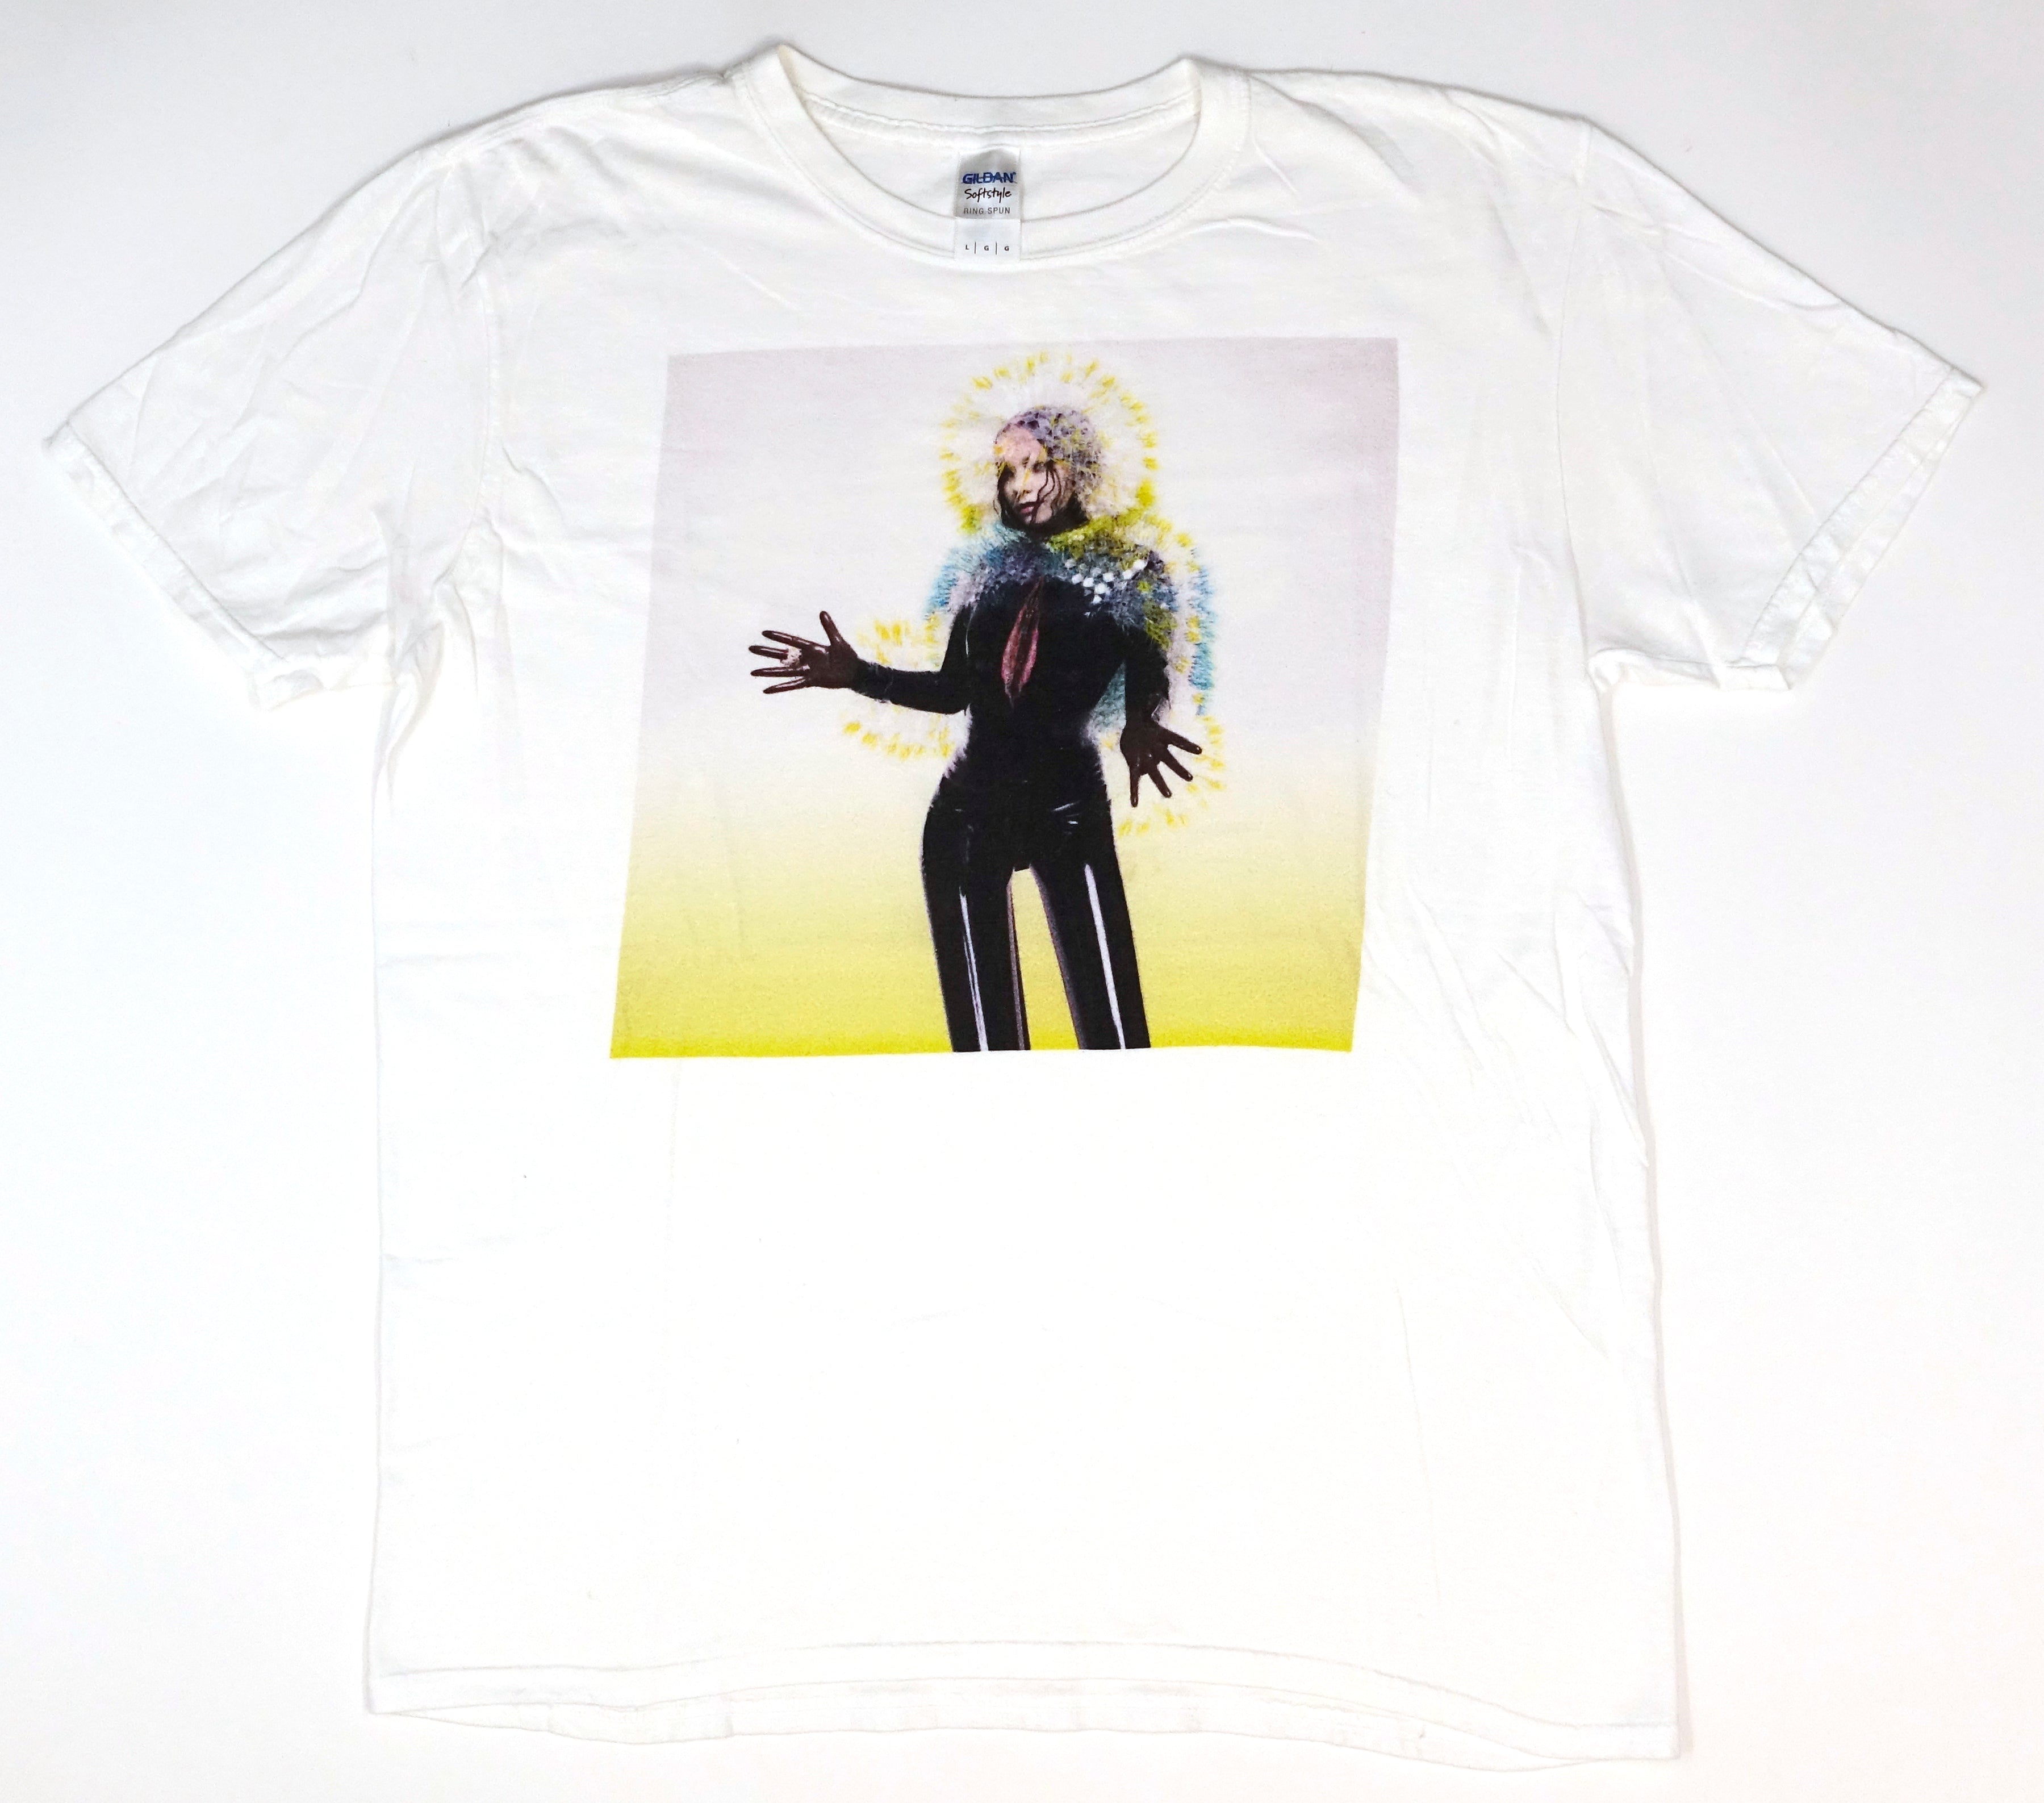 Björk - Vulnicura Cover 2015 Tour Shirt Size Large